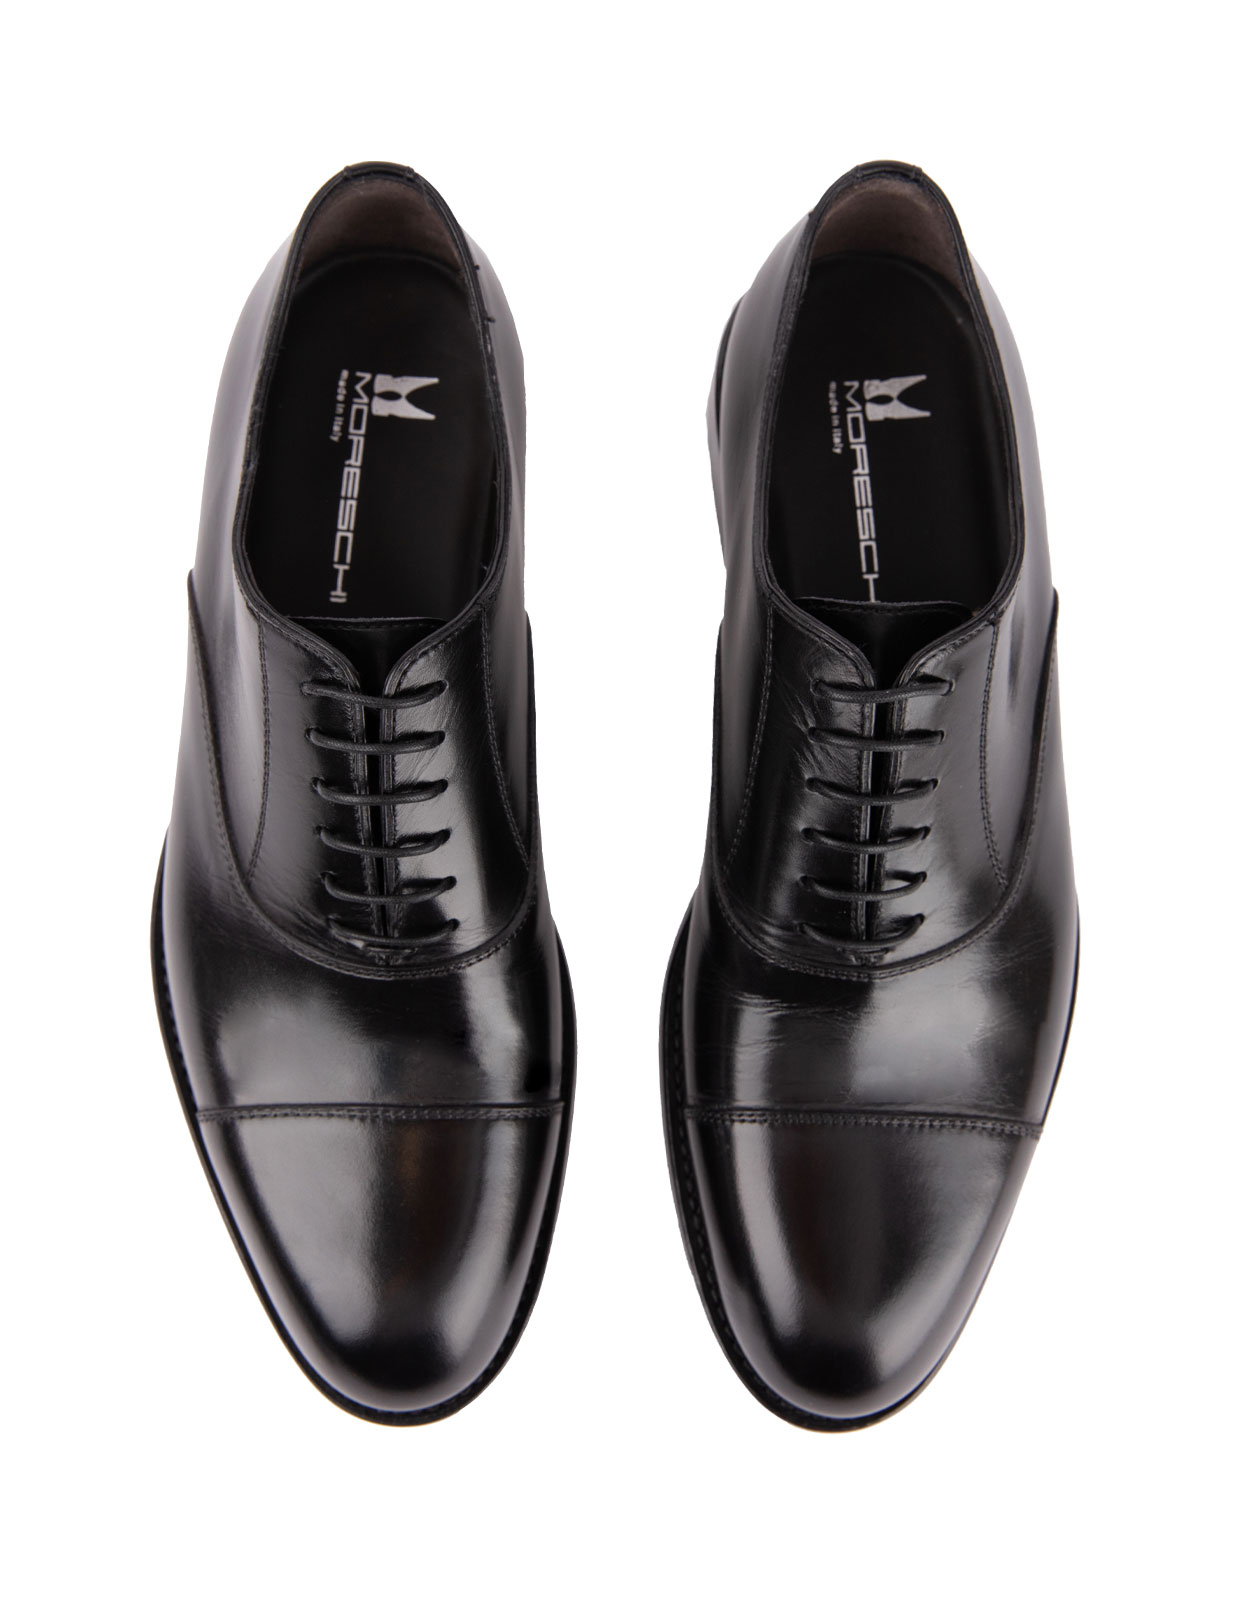 New York Oxford Shoes Calfskin Black Stl 10.5